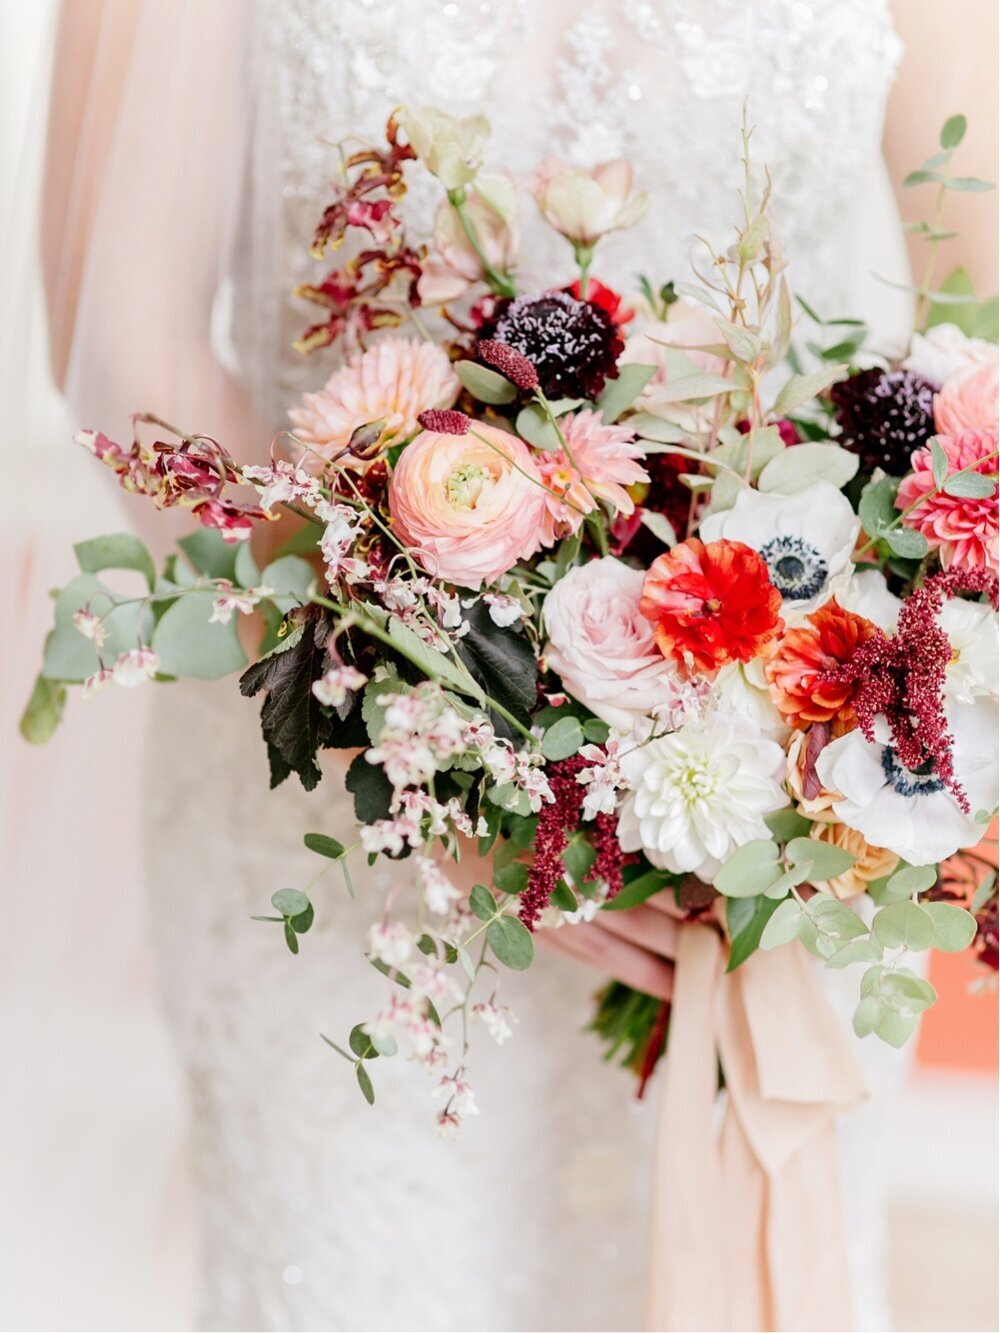 077_wedding-bouquet-inspiration_burgandy-and-white-wedding-bouquet_fall-wedding